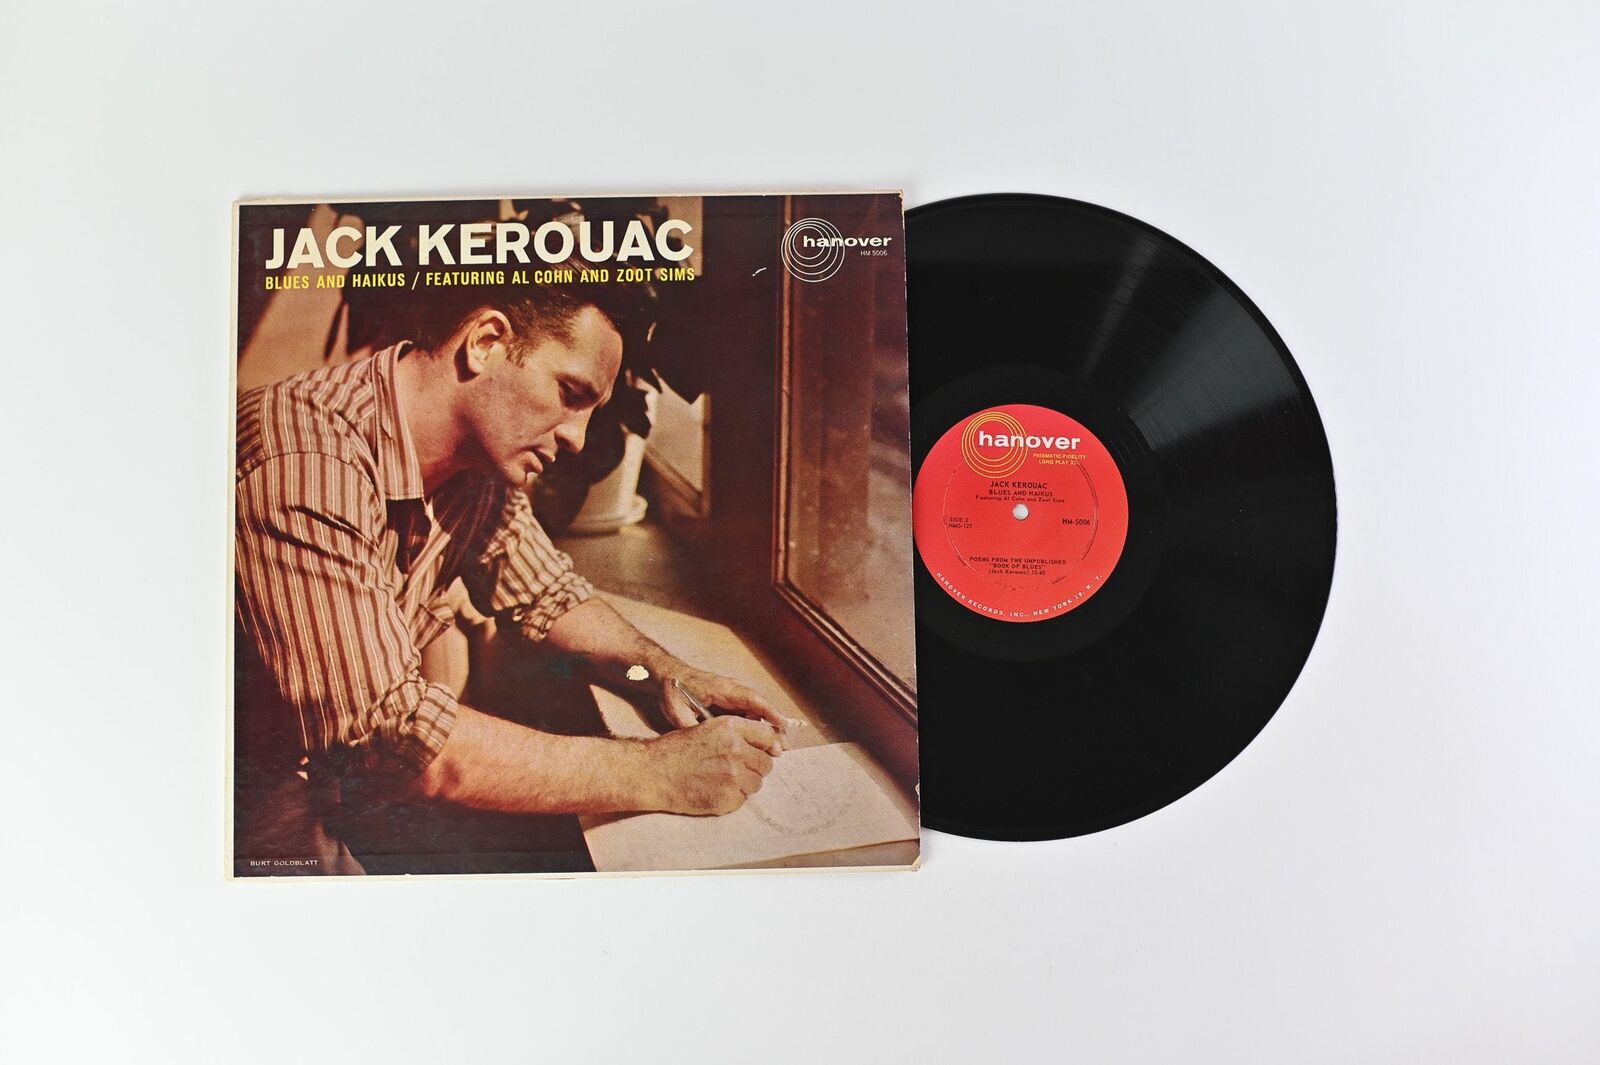 Jack Kerouac - Blues And Haikus on Hanover Vinyl LP